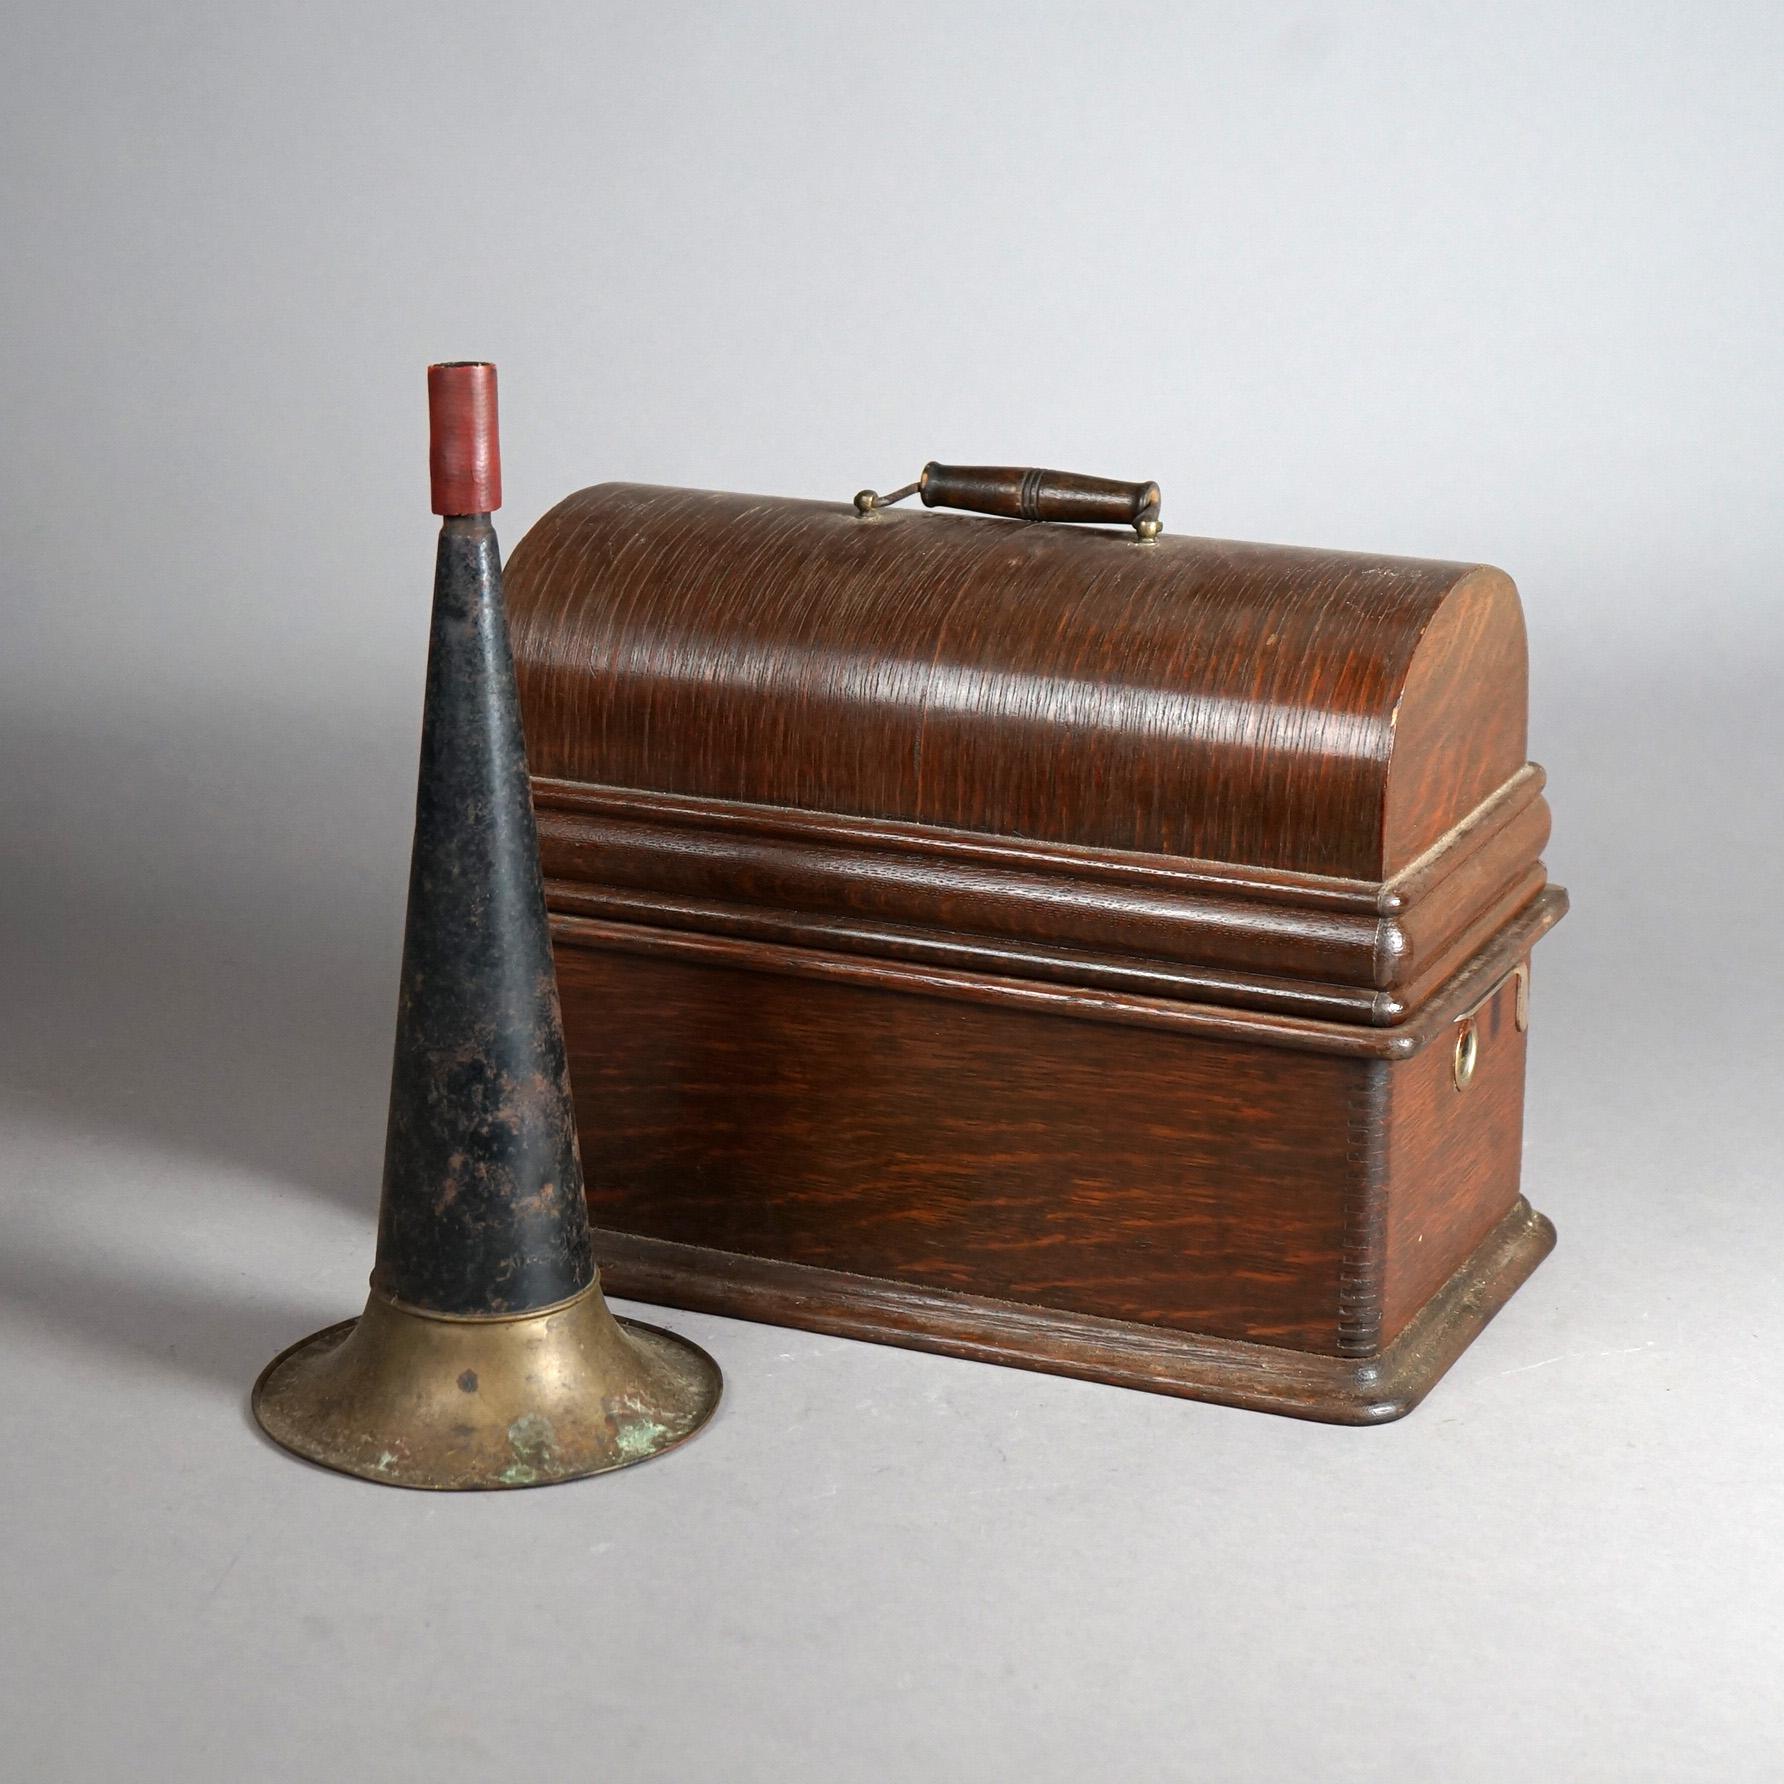 edison cylinder phonograph models